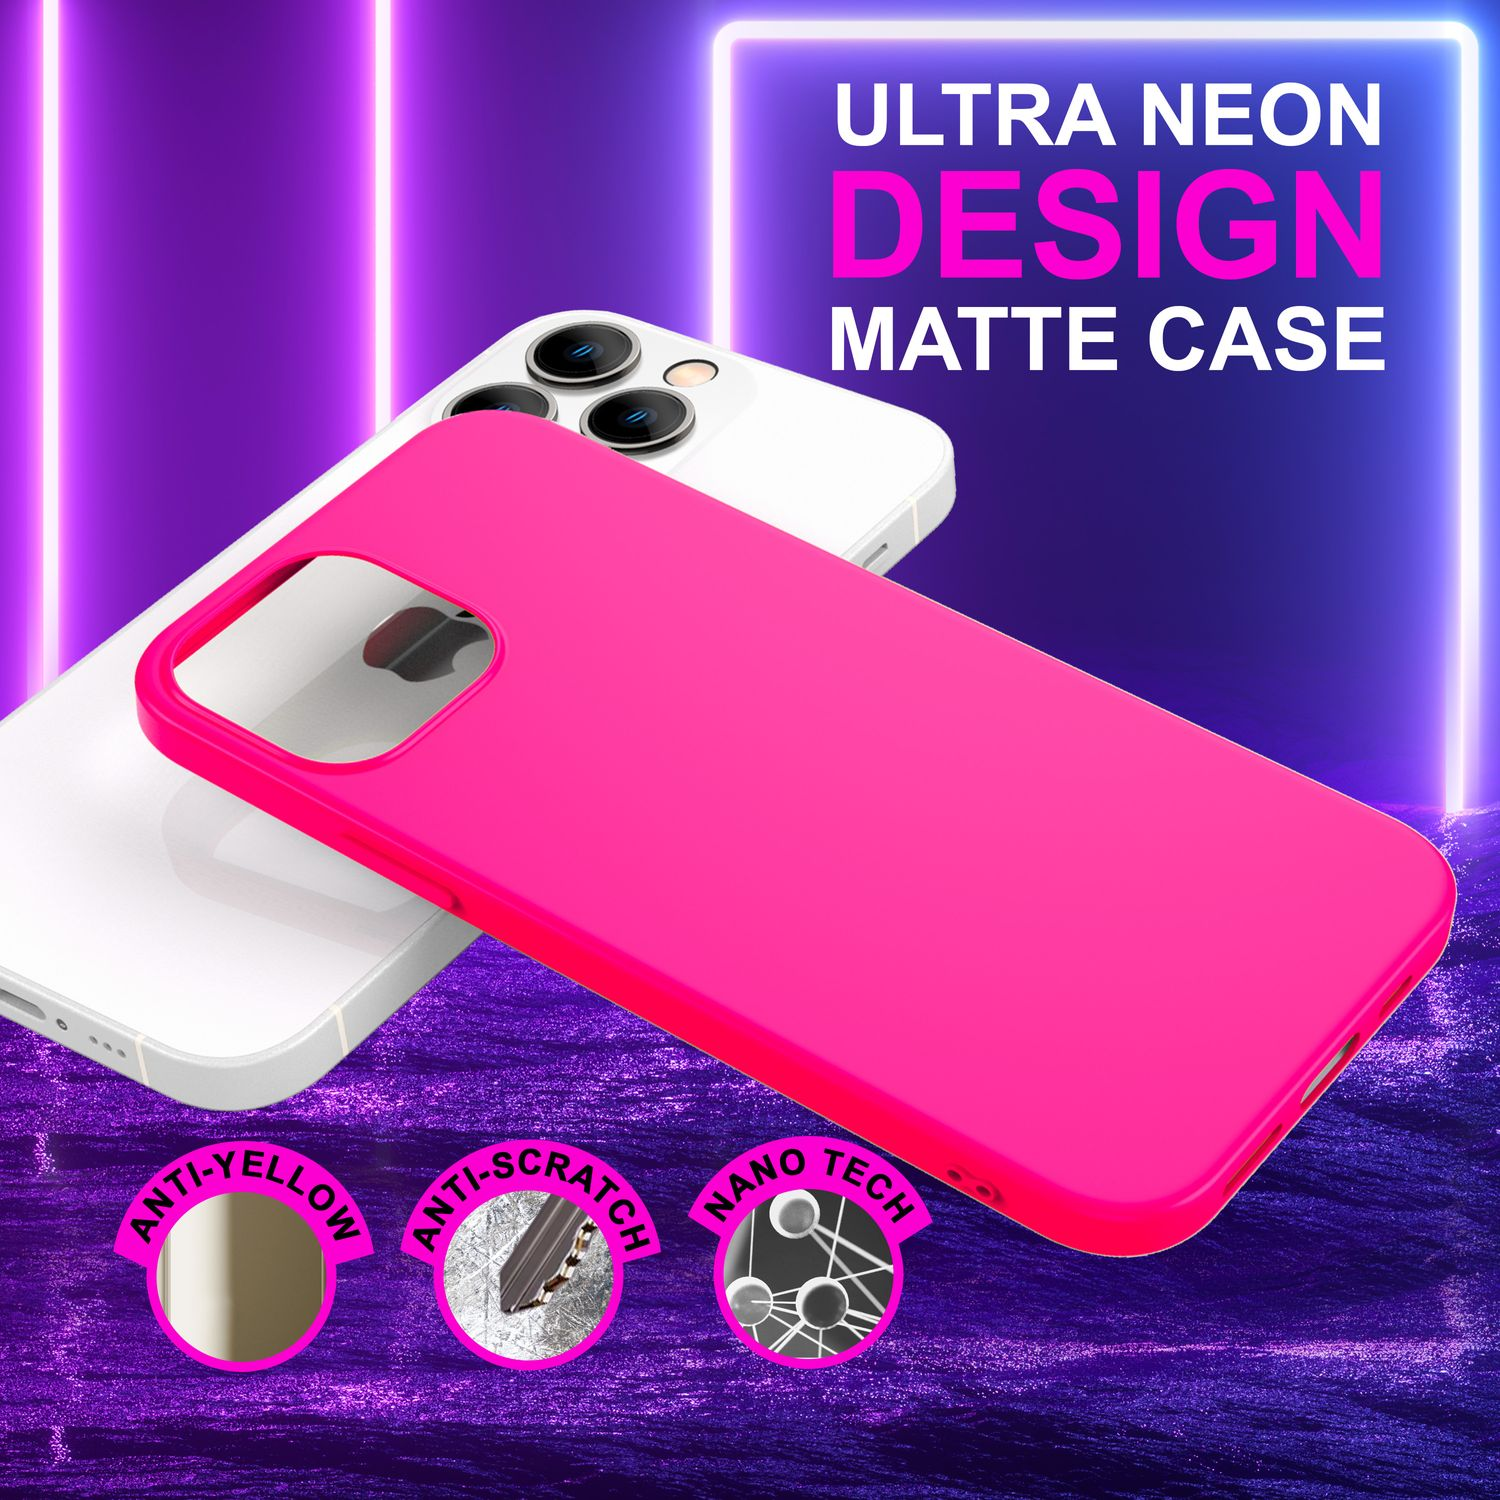 Hülle, iPhone Backcover, Pro NALIA Silikon 14 Max, Apple, Pink Neon